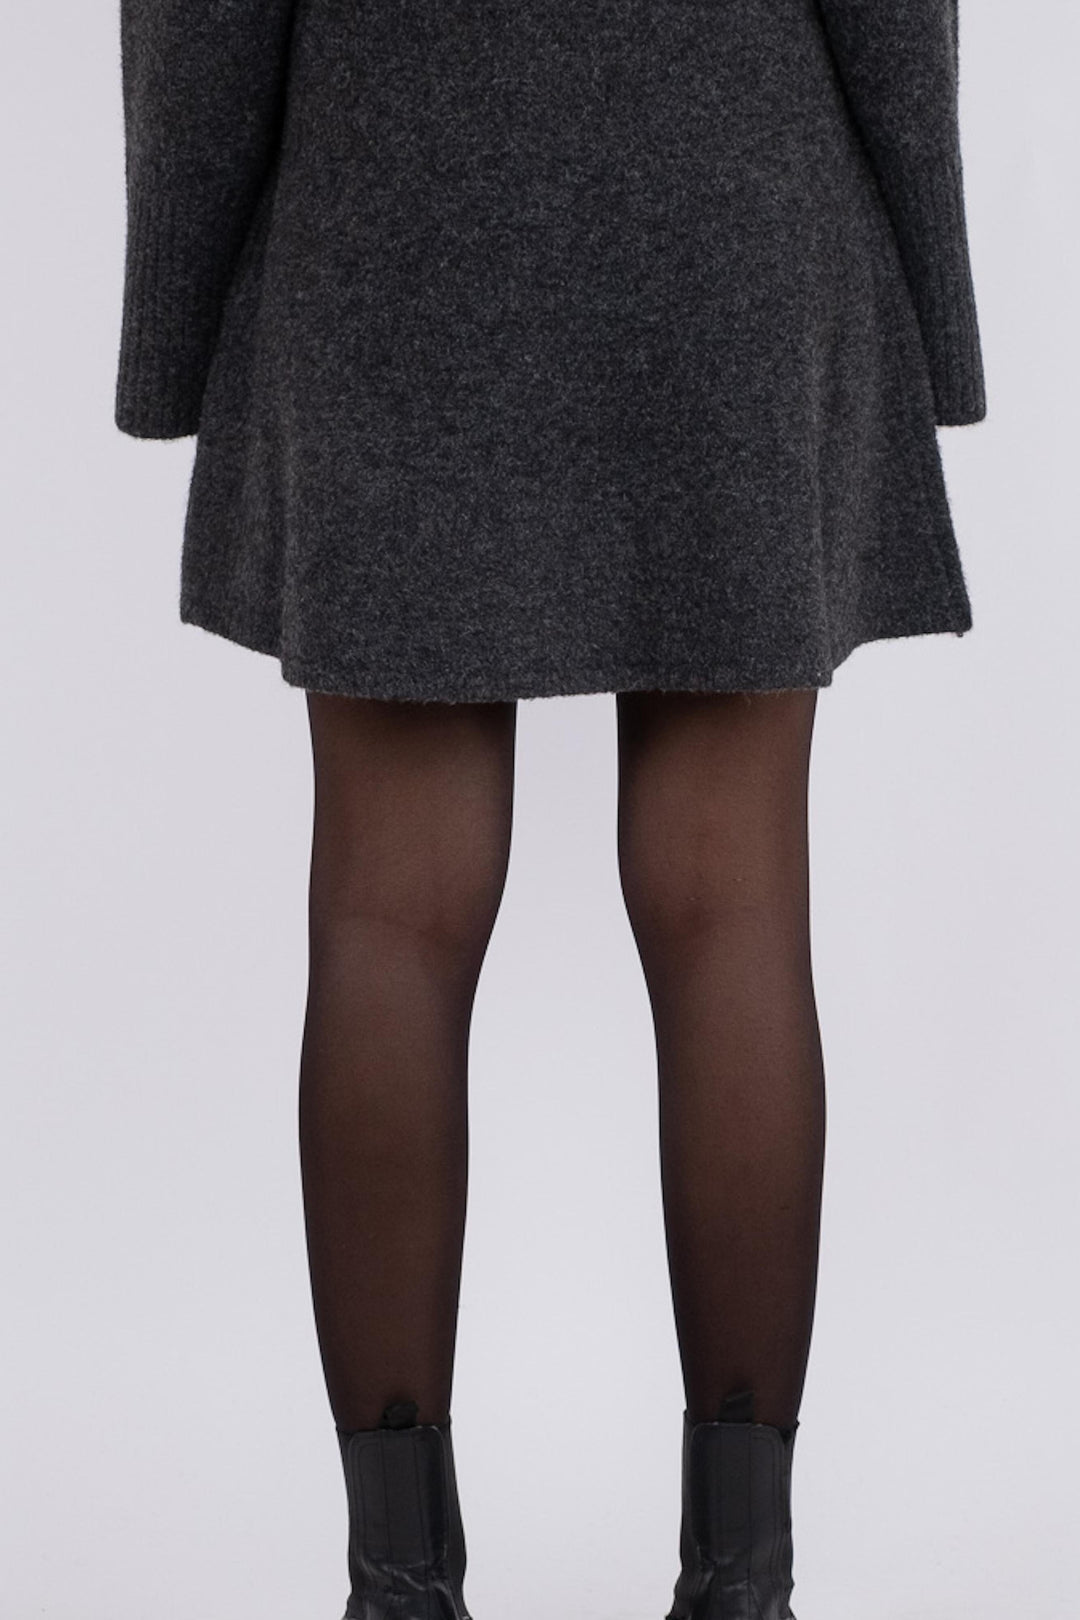 Neo Noir - Gisa Knit Skirt - Antracit